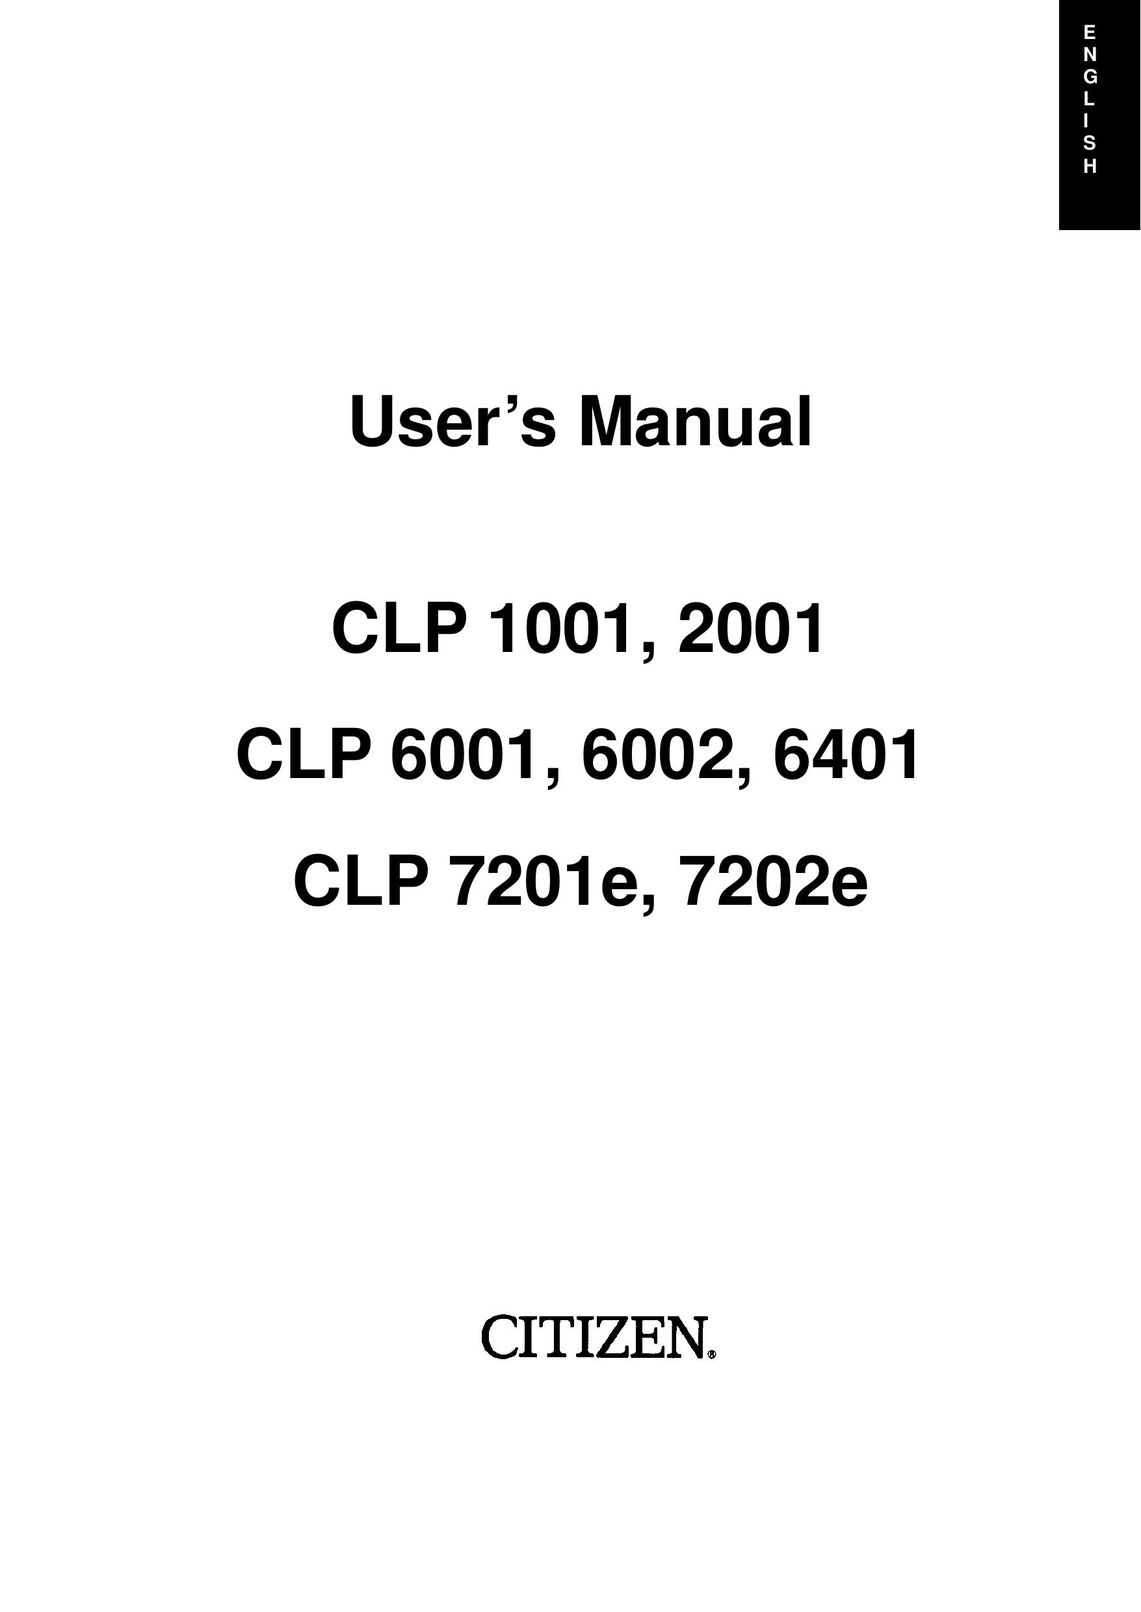 Citizen Systems CLP 1001 Printer User Manual